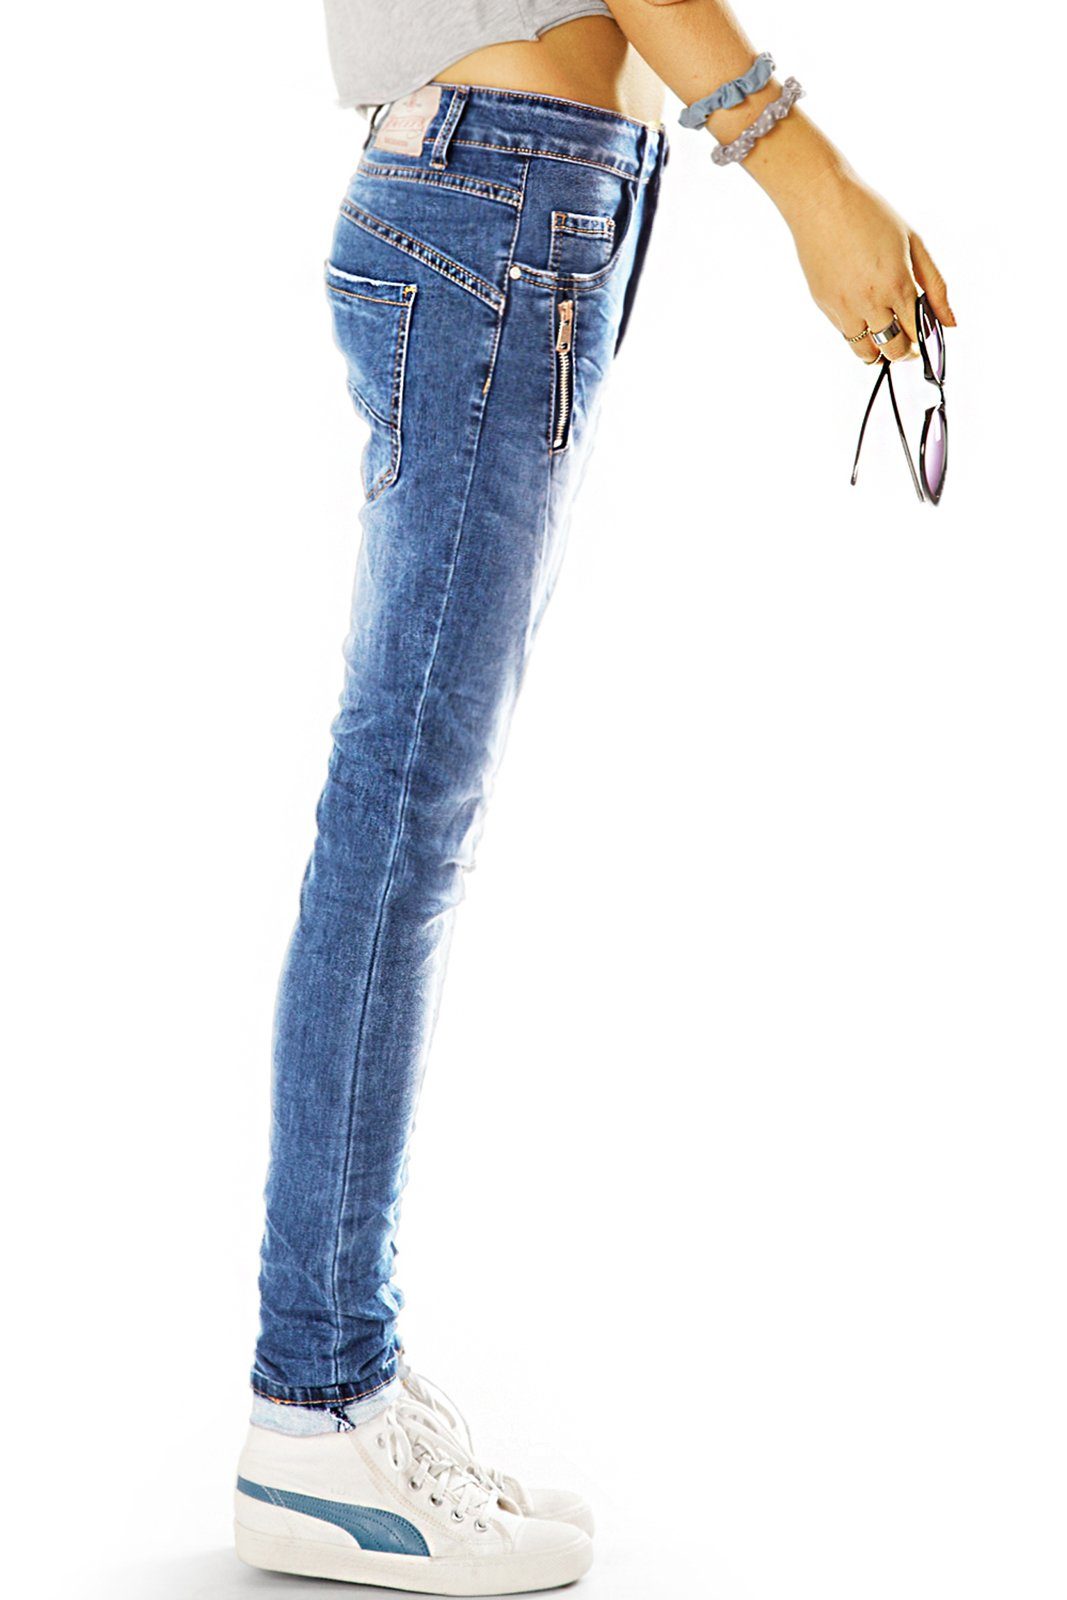 Hüftjeans bequeme - Stretch-Anteil, Damen- styled Hose Low-rise-Jeans 5-Pocket-Style Jeans mit Slim be Fit j6f-1 Rise Low